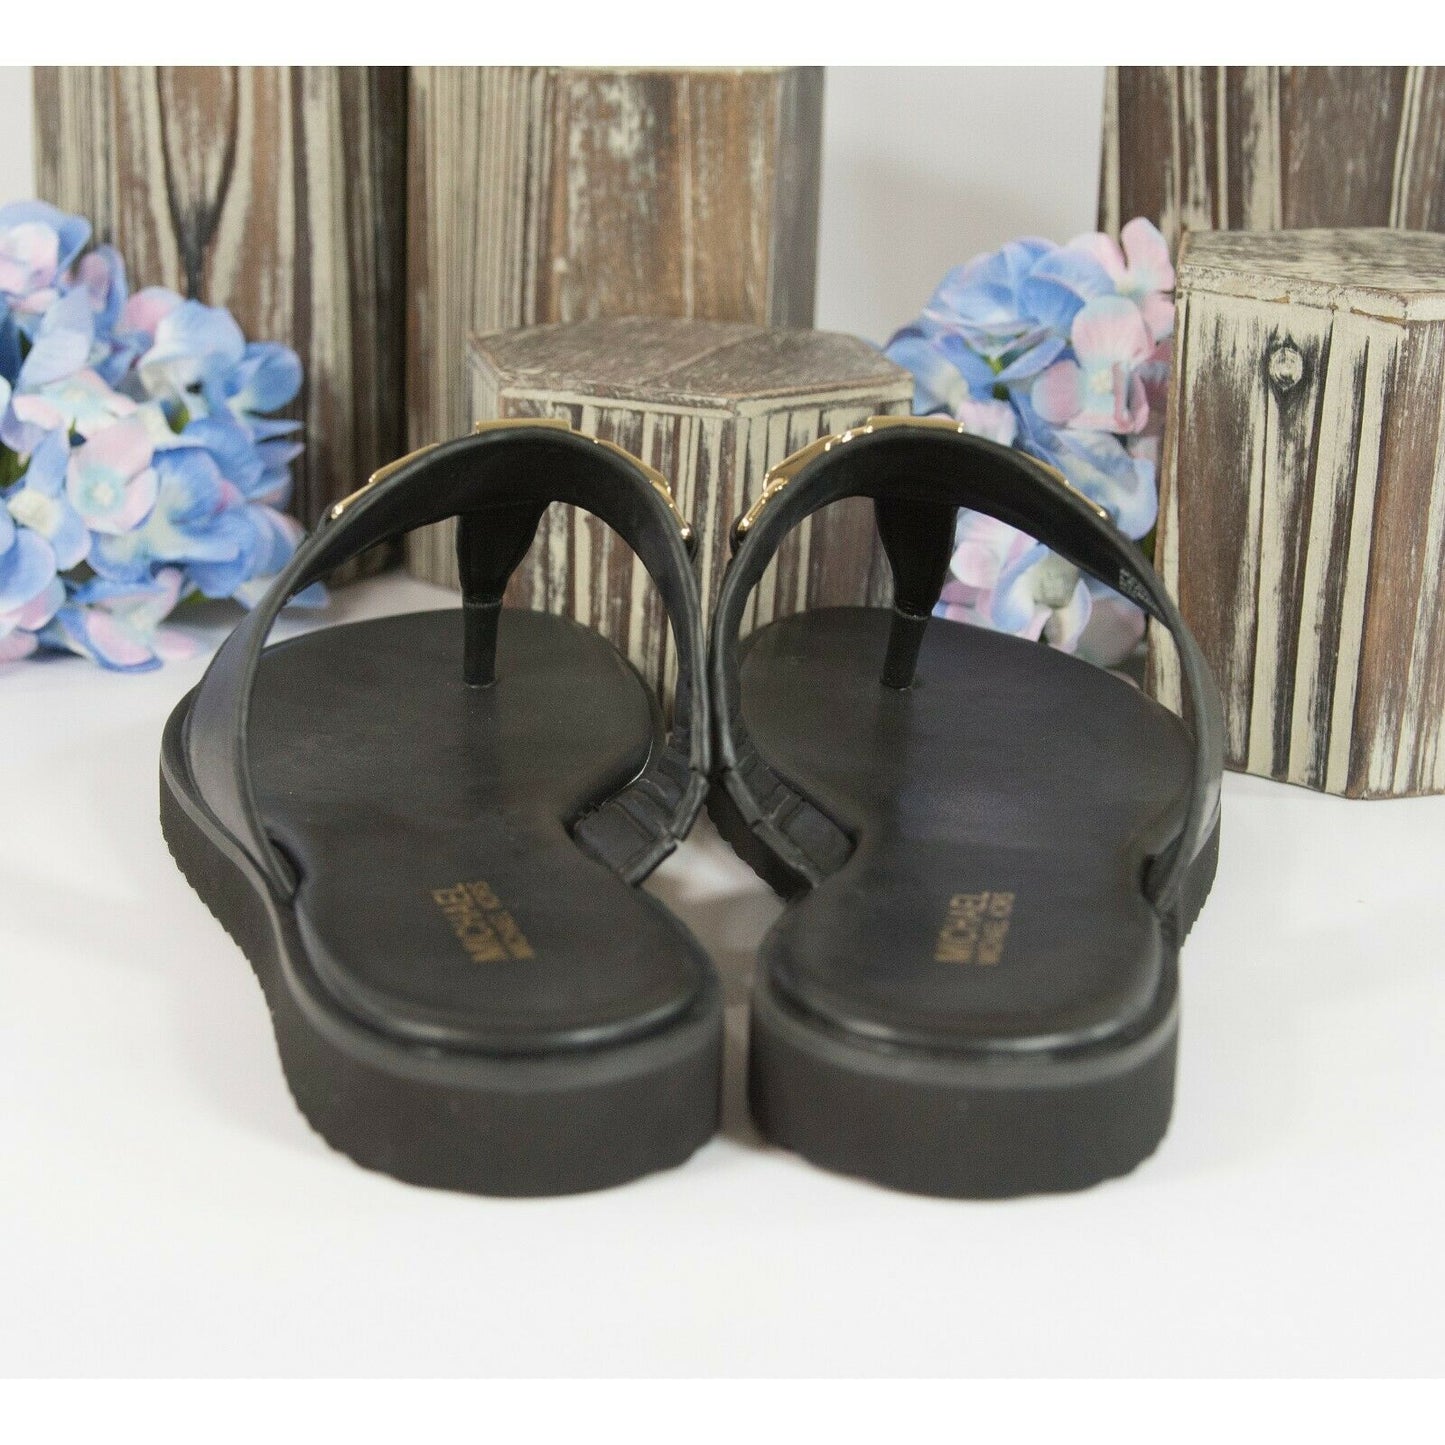 Michael Kors Charlton Black Leather Flats Thong Sandals 6 NIB